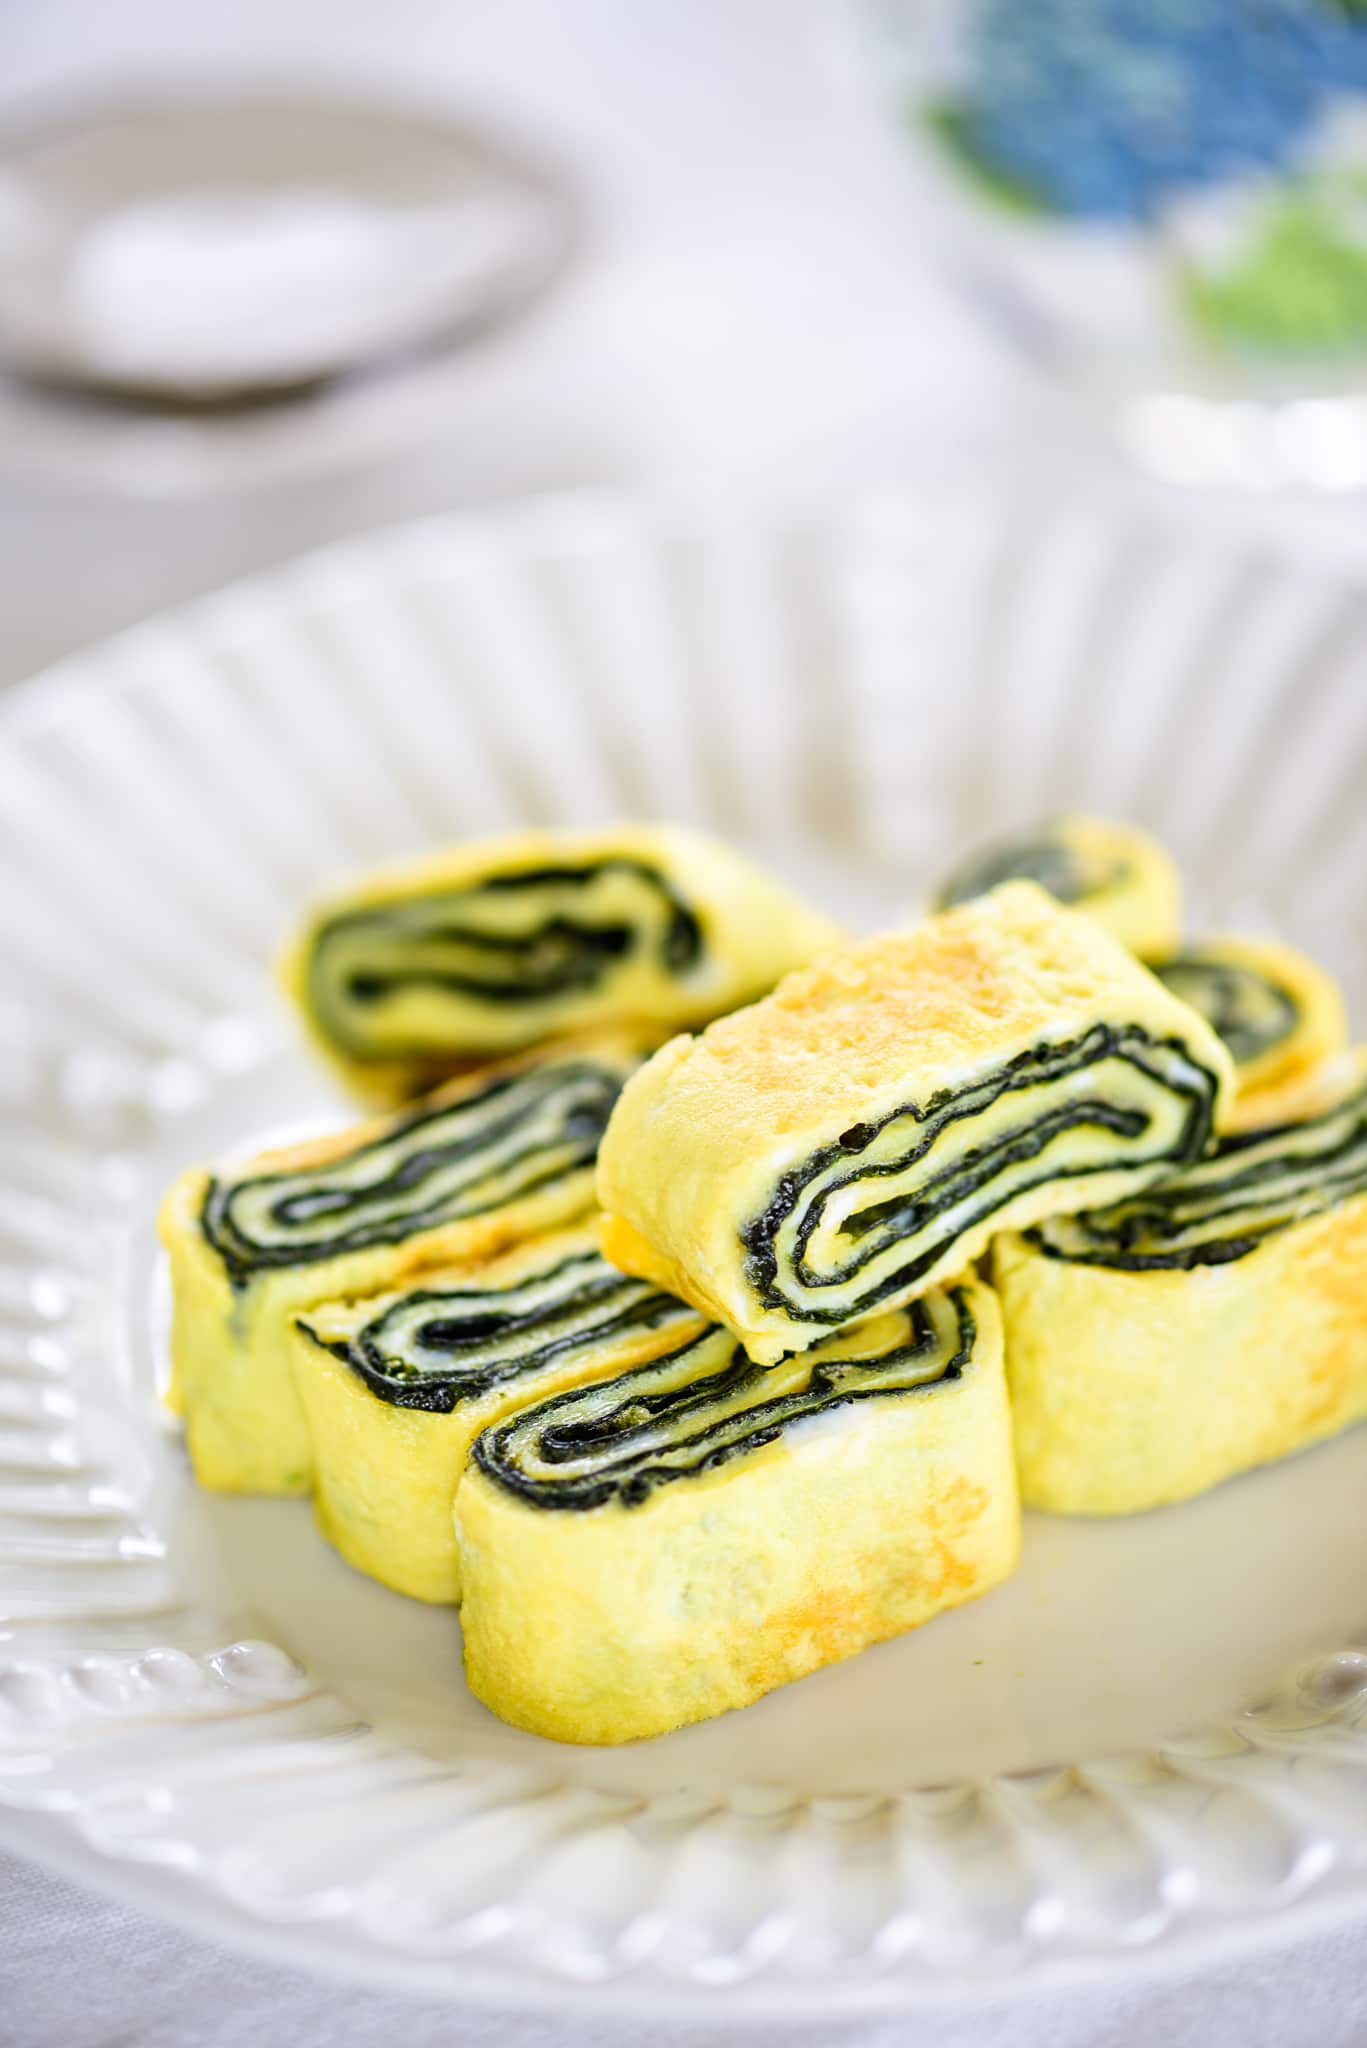 DSC0087 - Gyeran Mari (Rolled Omelette) with Seaweed